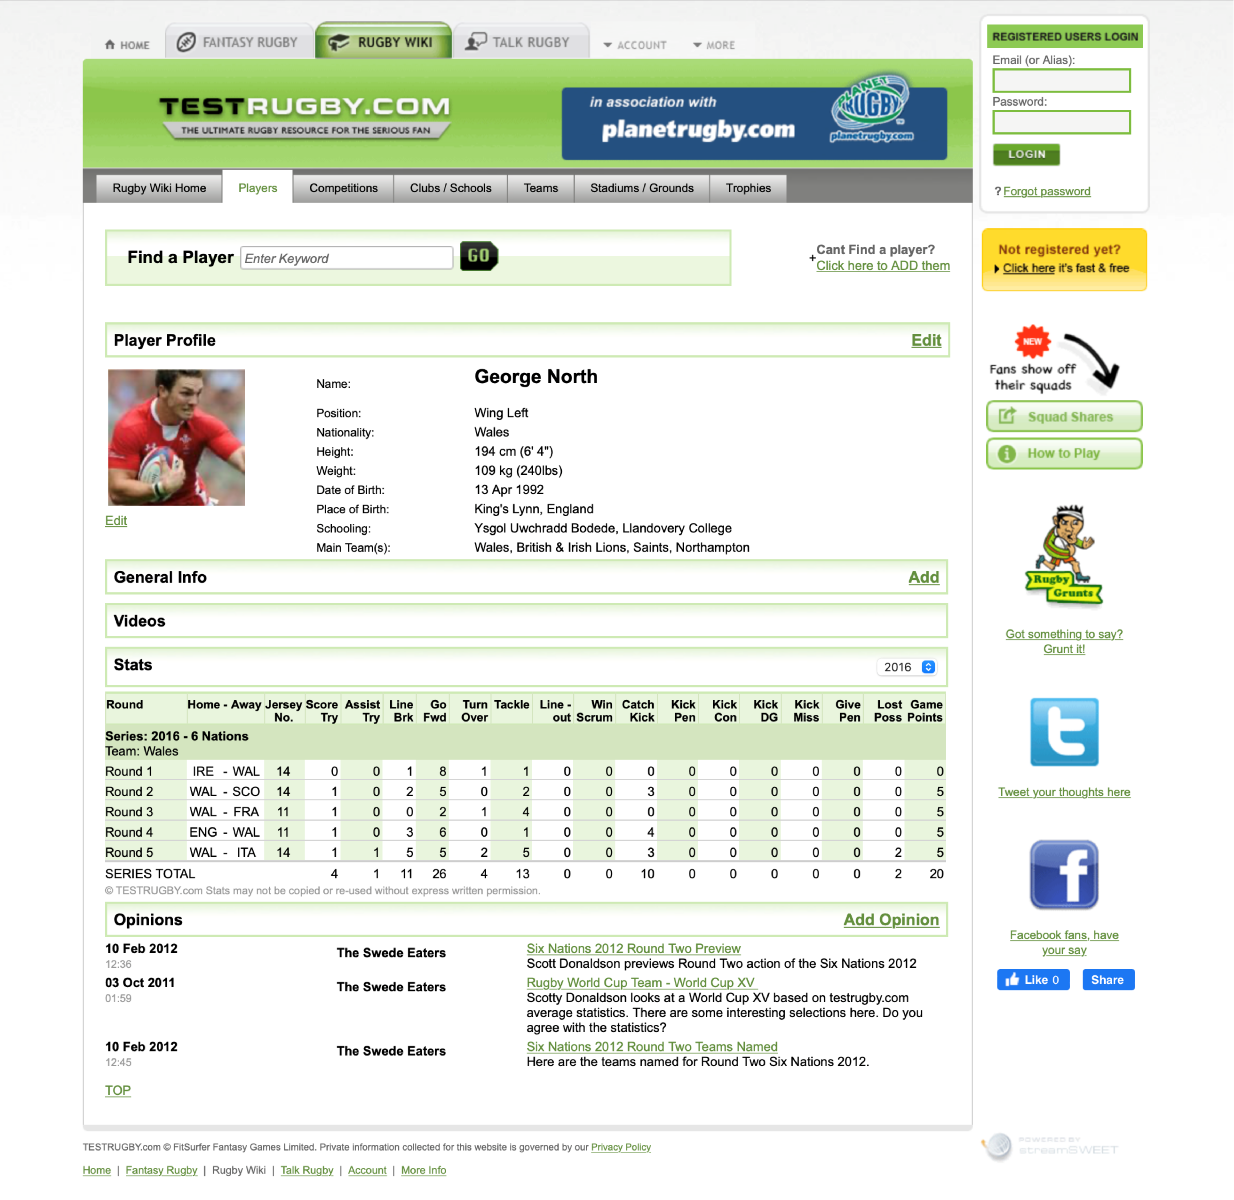 Player Profile - George North